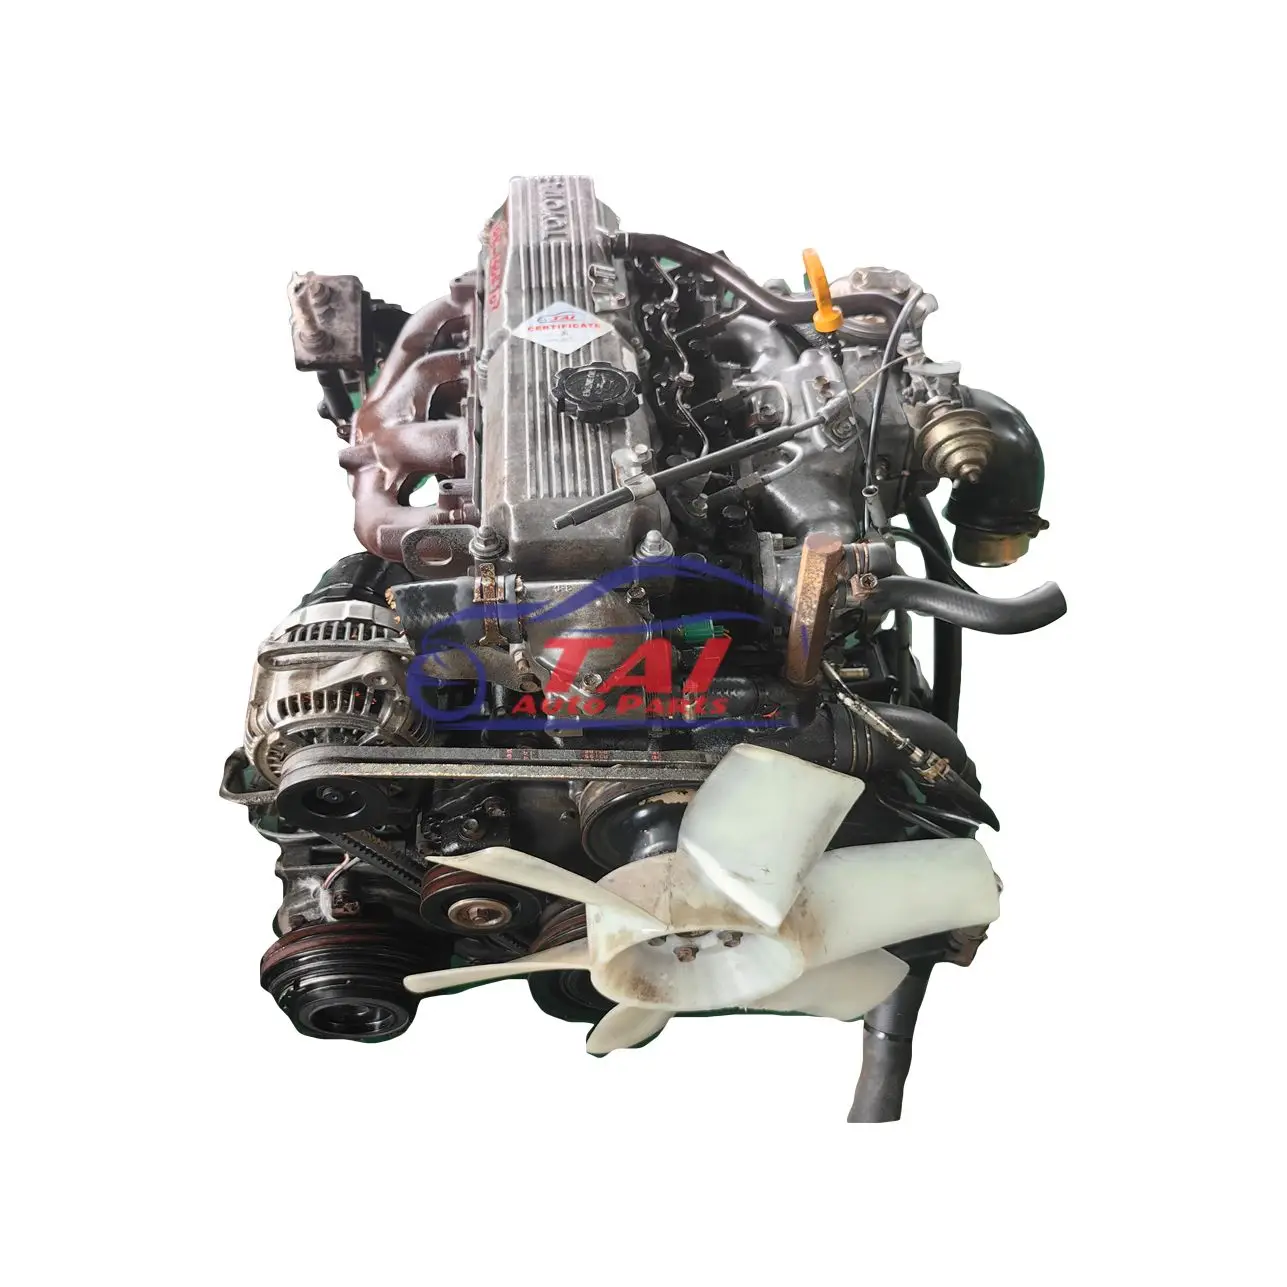 Original Used Bus Motor Coaster 14b Used Genuine Engine Used For Toyota  Dyna| Alibaba.com - パーツ